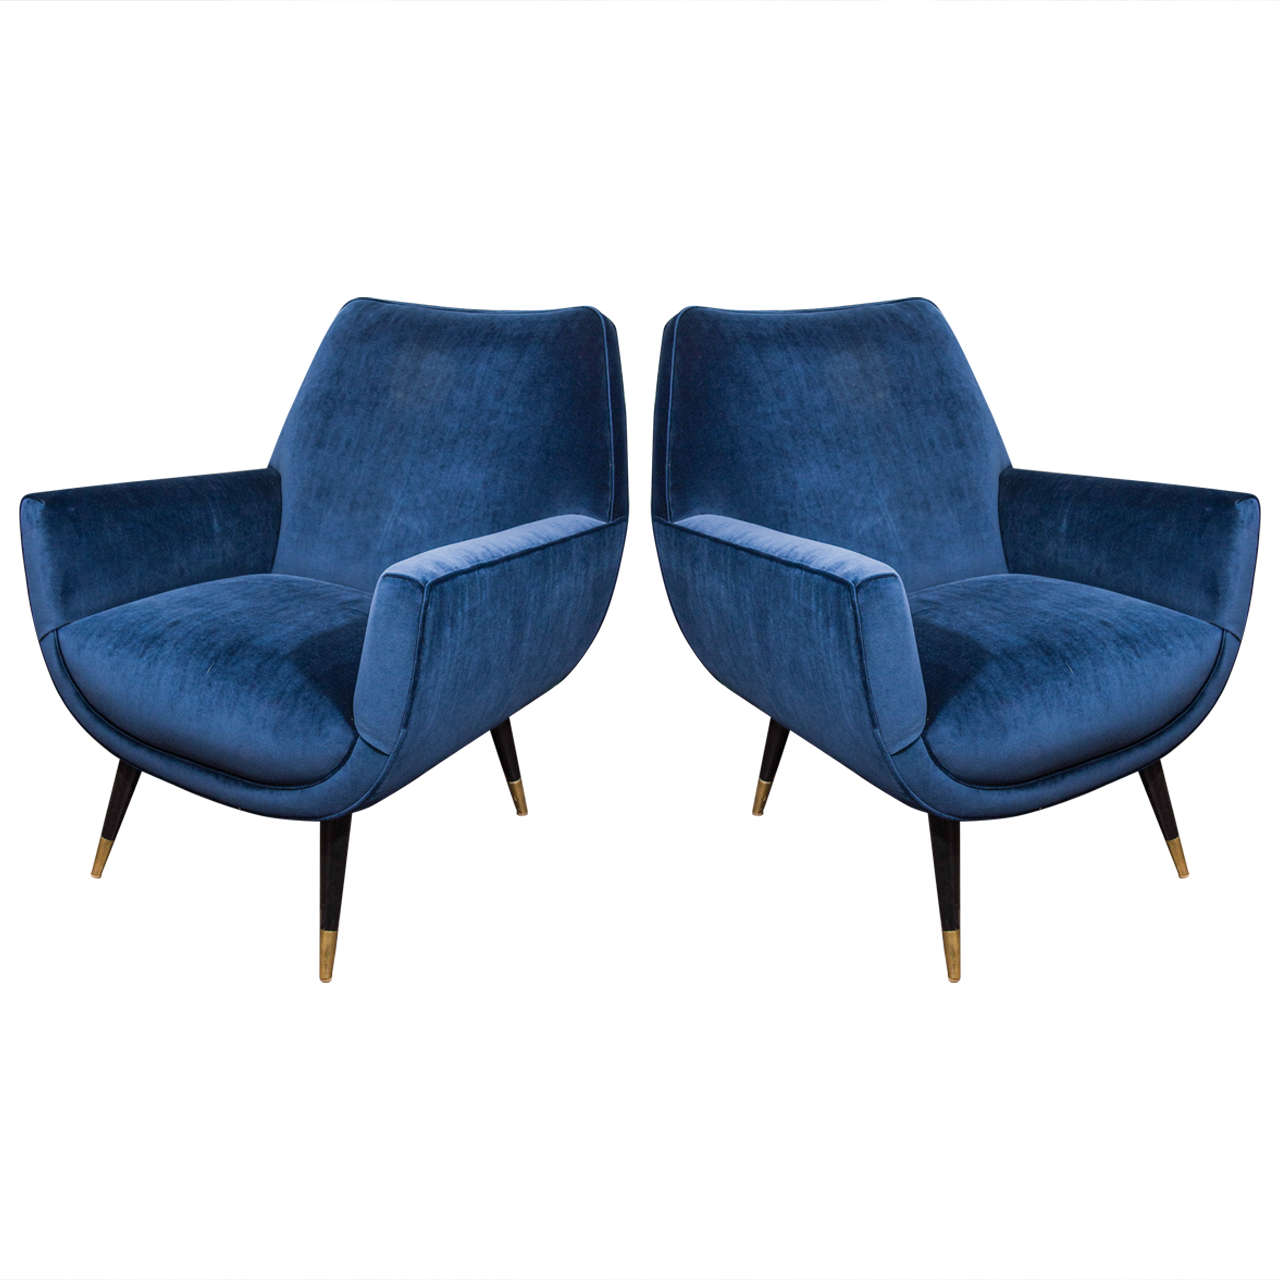 Custom Pair of Italian Mid-Century Modern Style Club Chairs